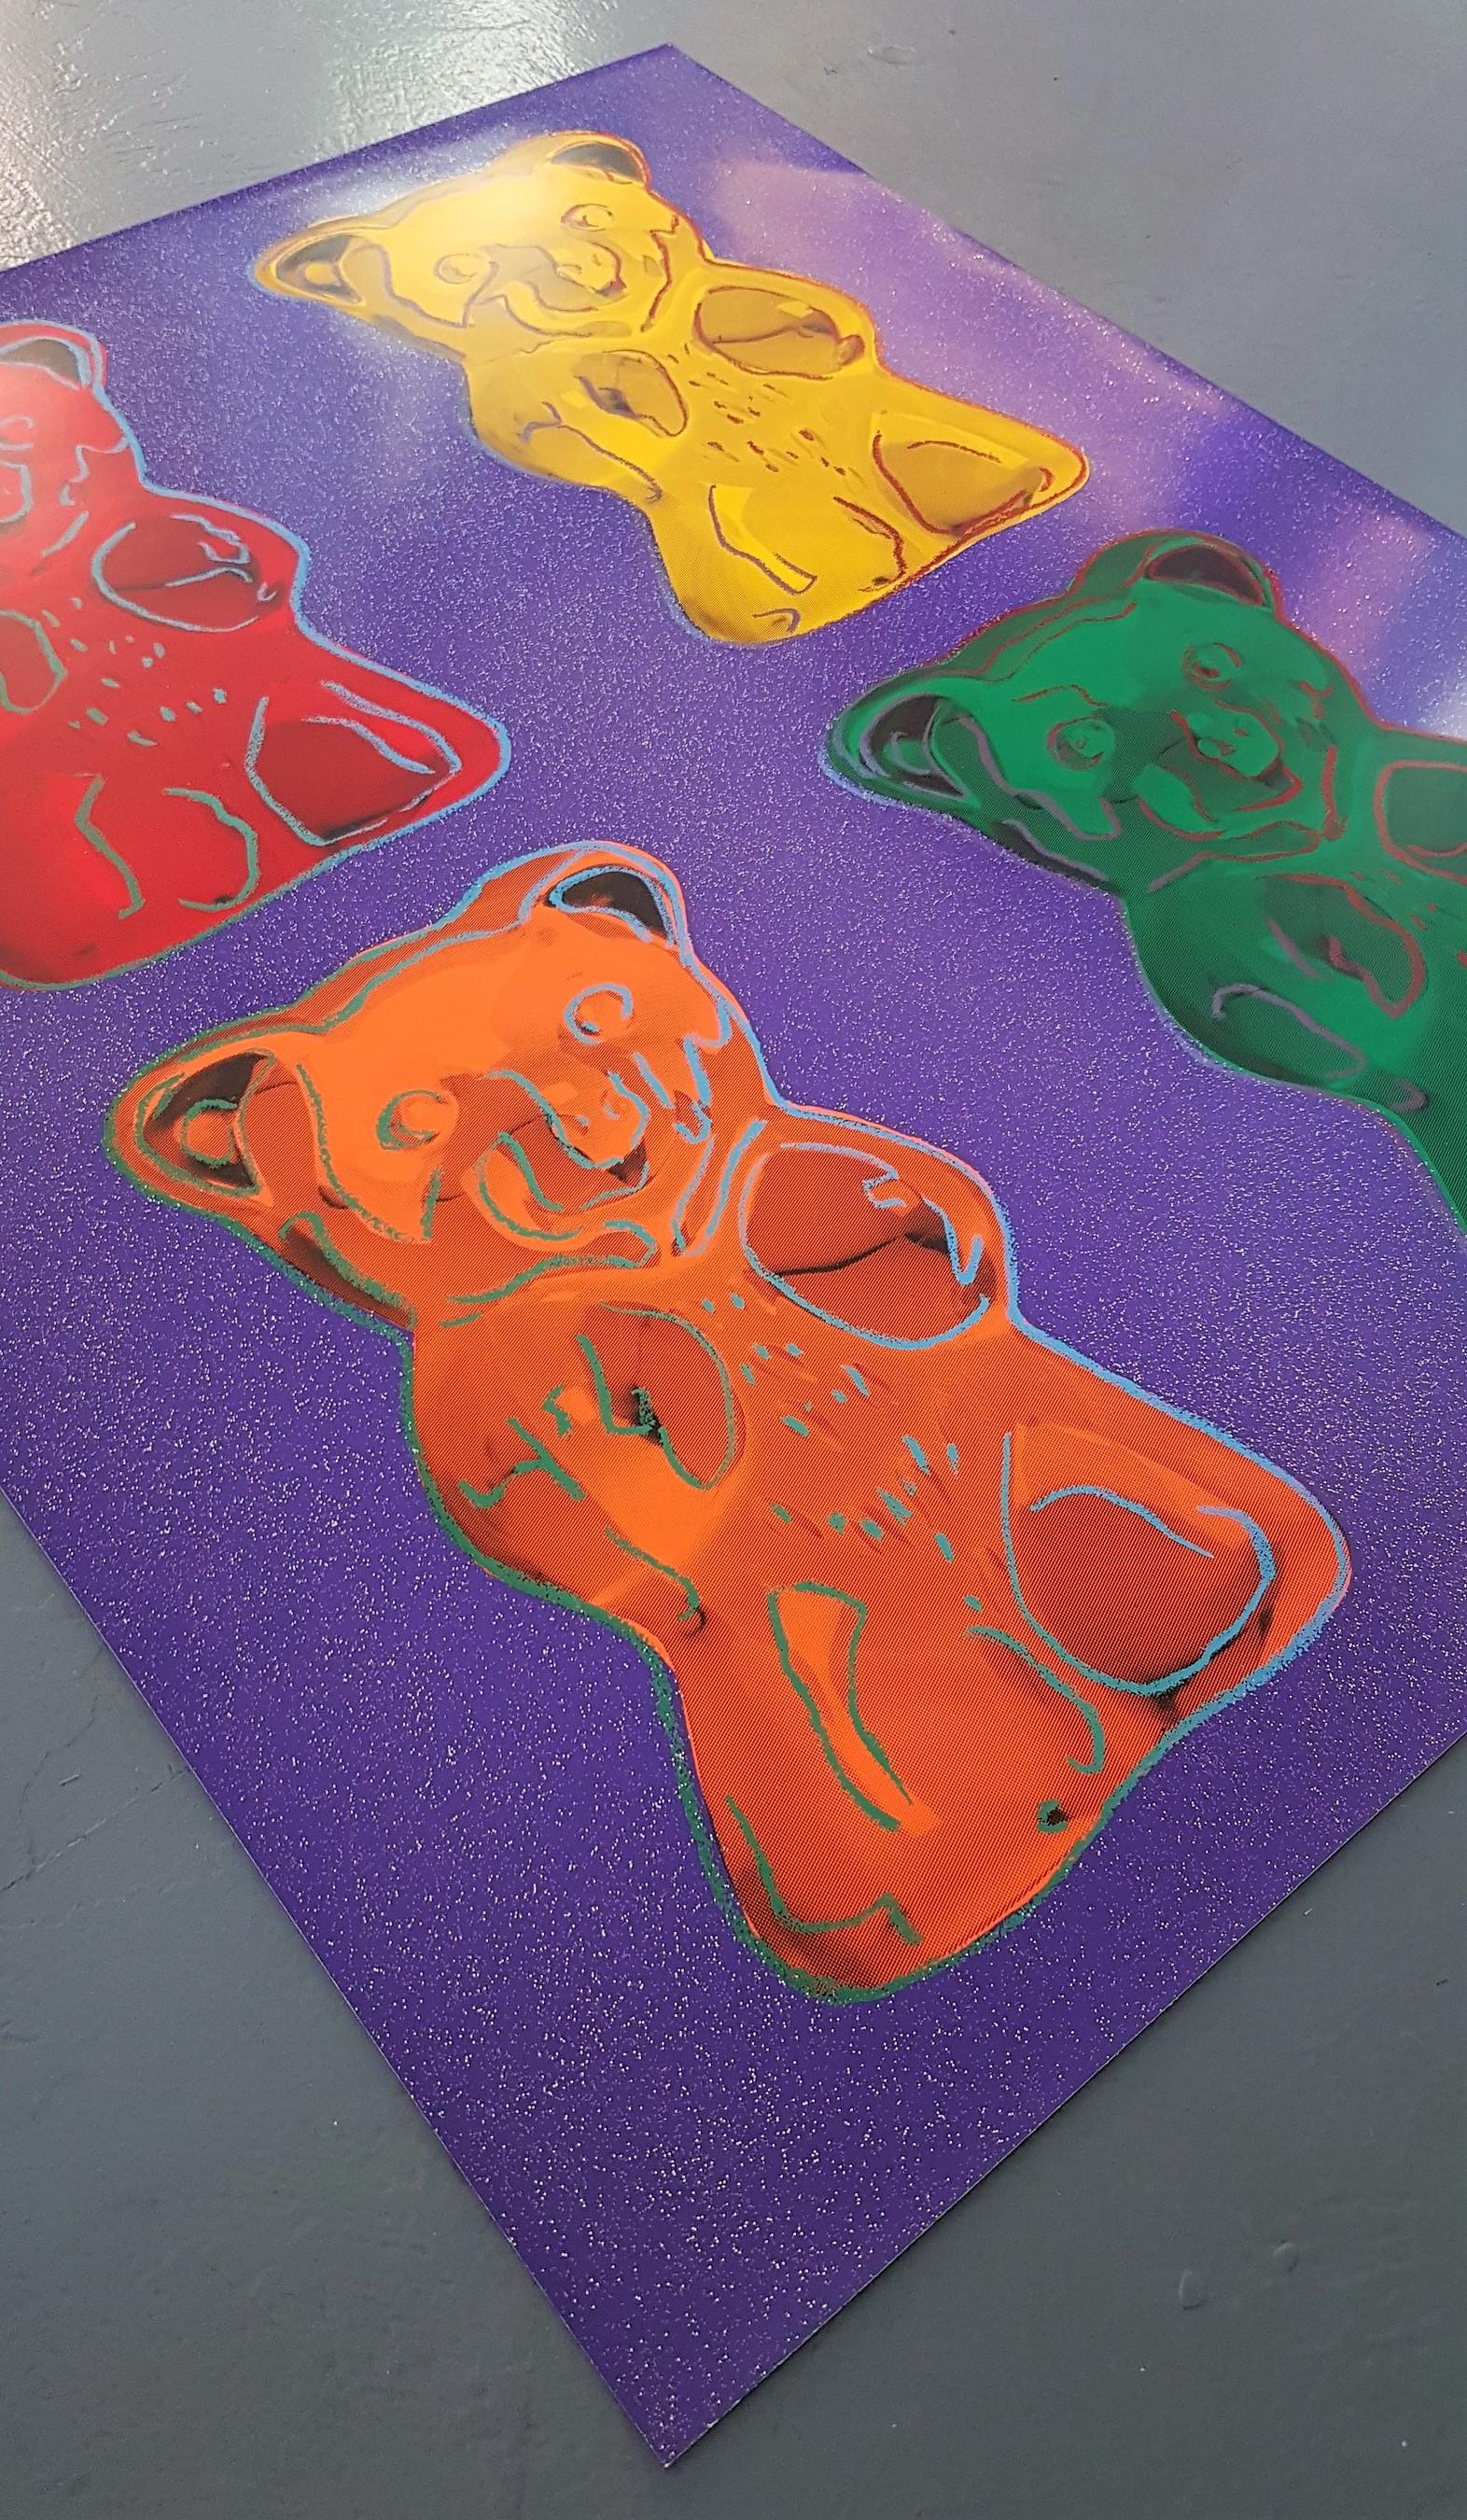 Gummibears #1 (Pop Art, Andy Warhol)  - Purple Figurative Print by Jurgen Kuhl 